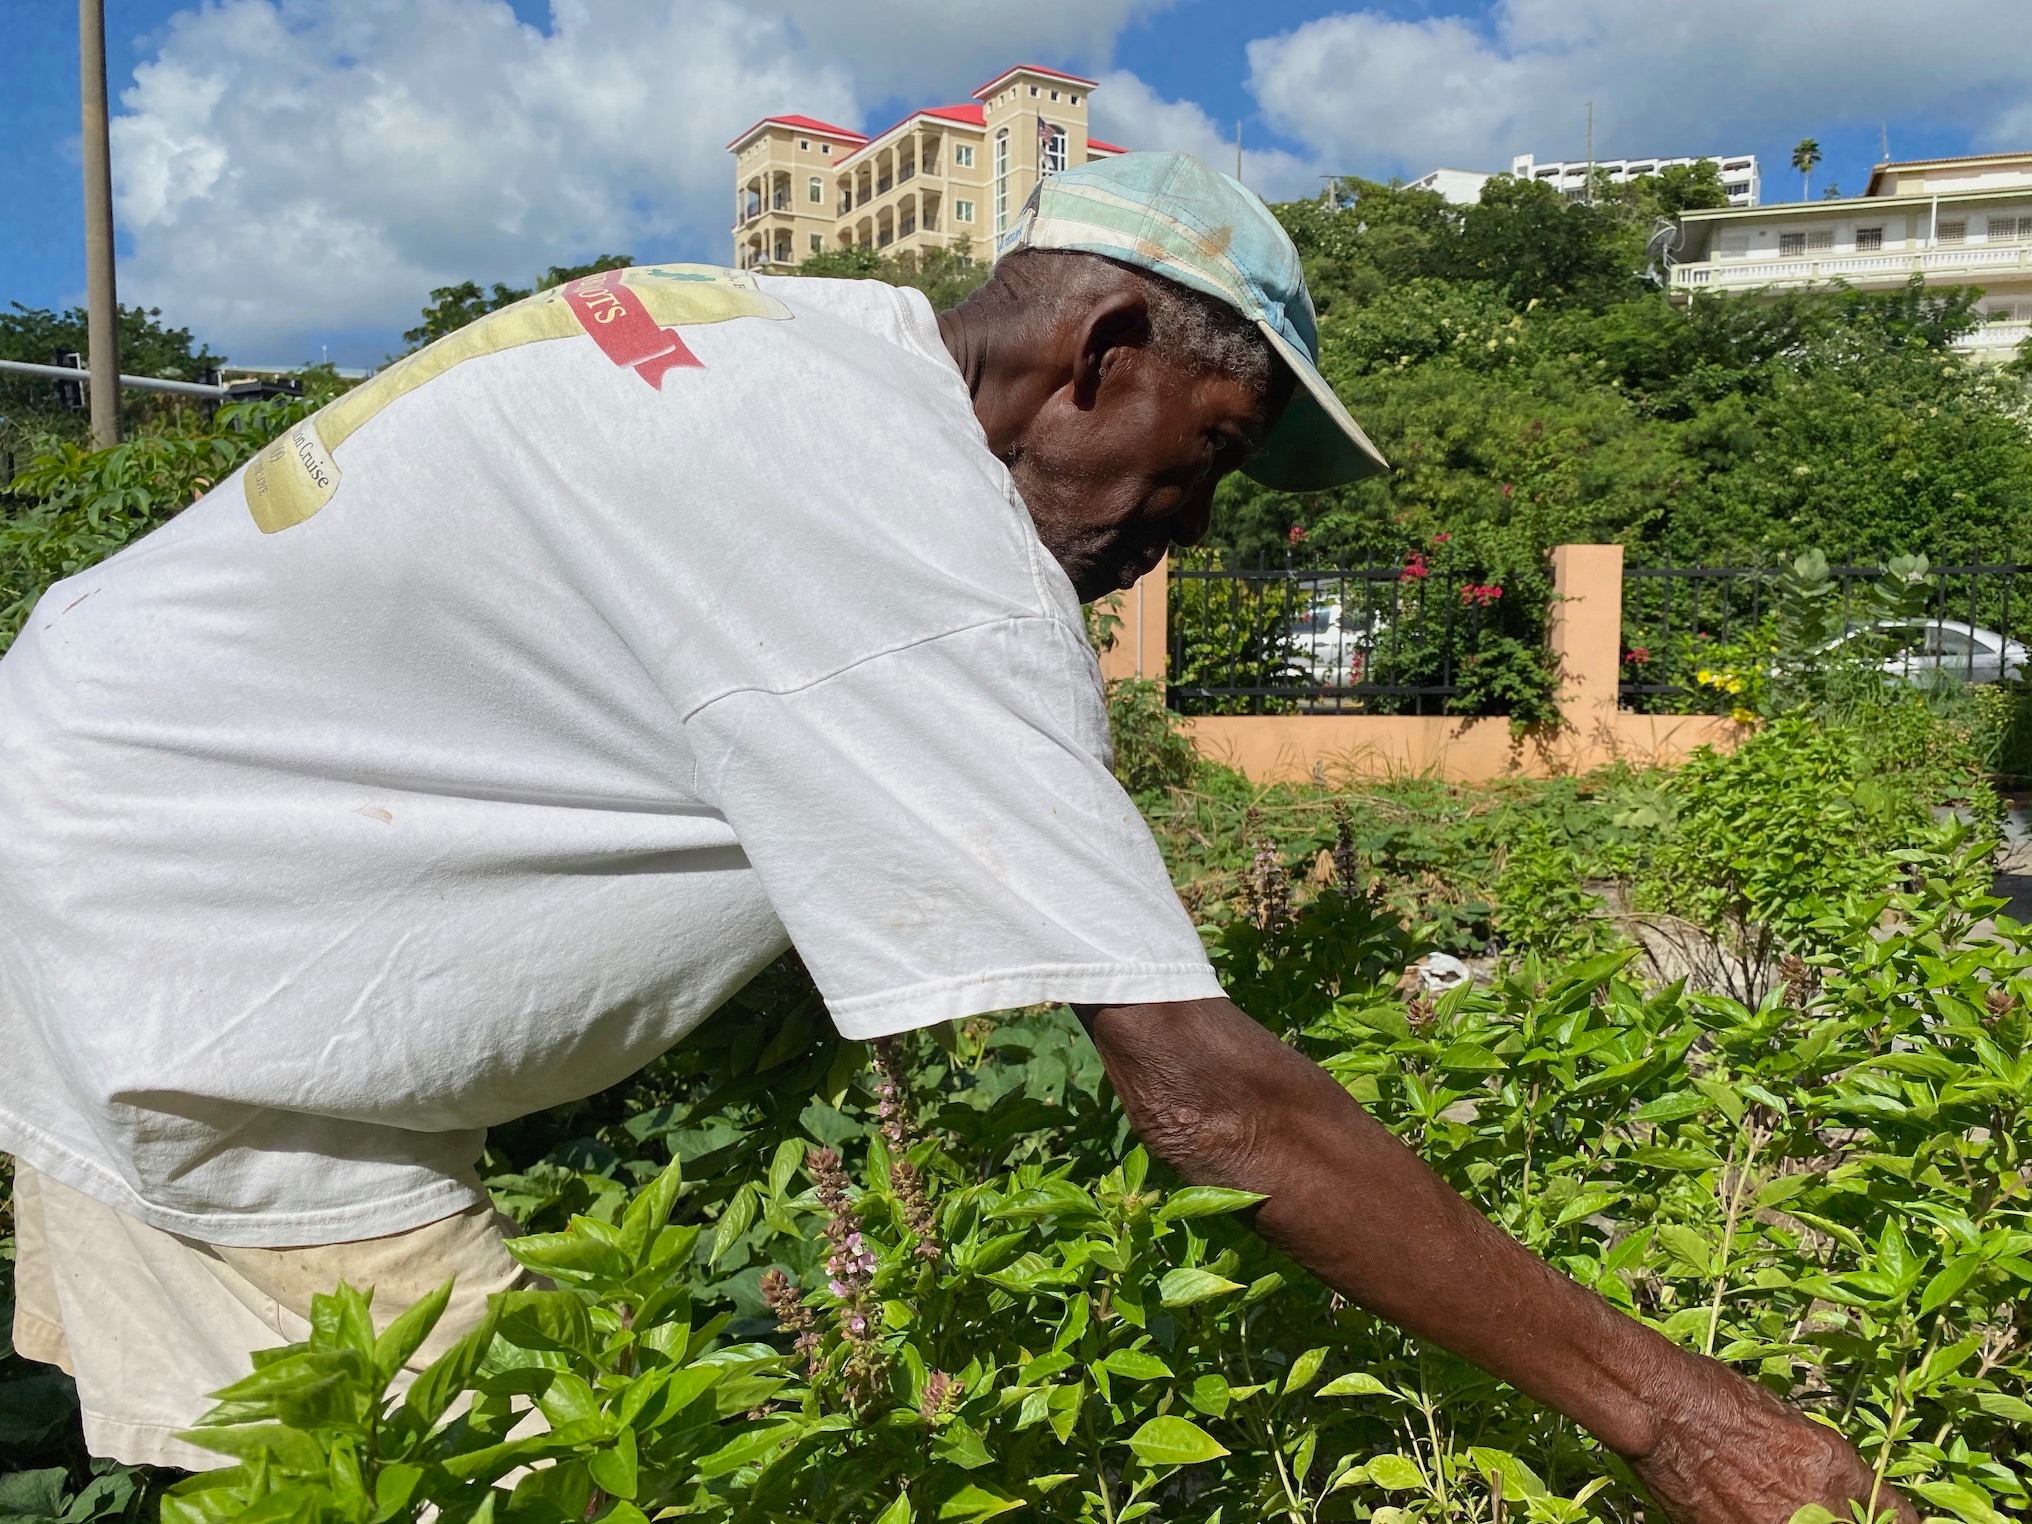 95-Year-Old 'Urban Gardener' Beautifies Housing Community On St. Thomas For 20 Years